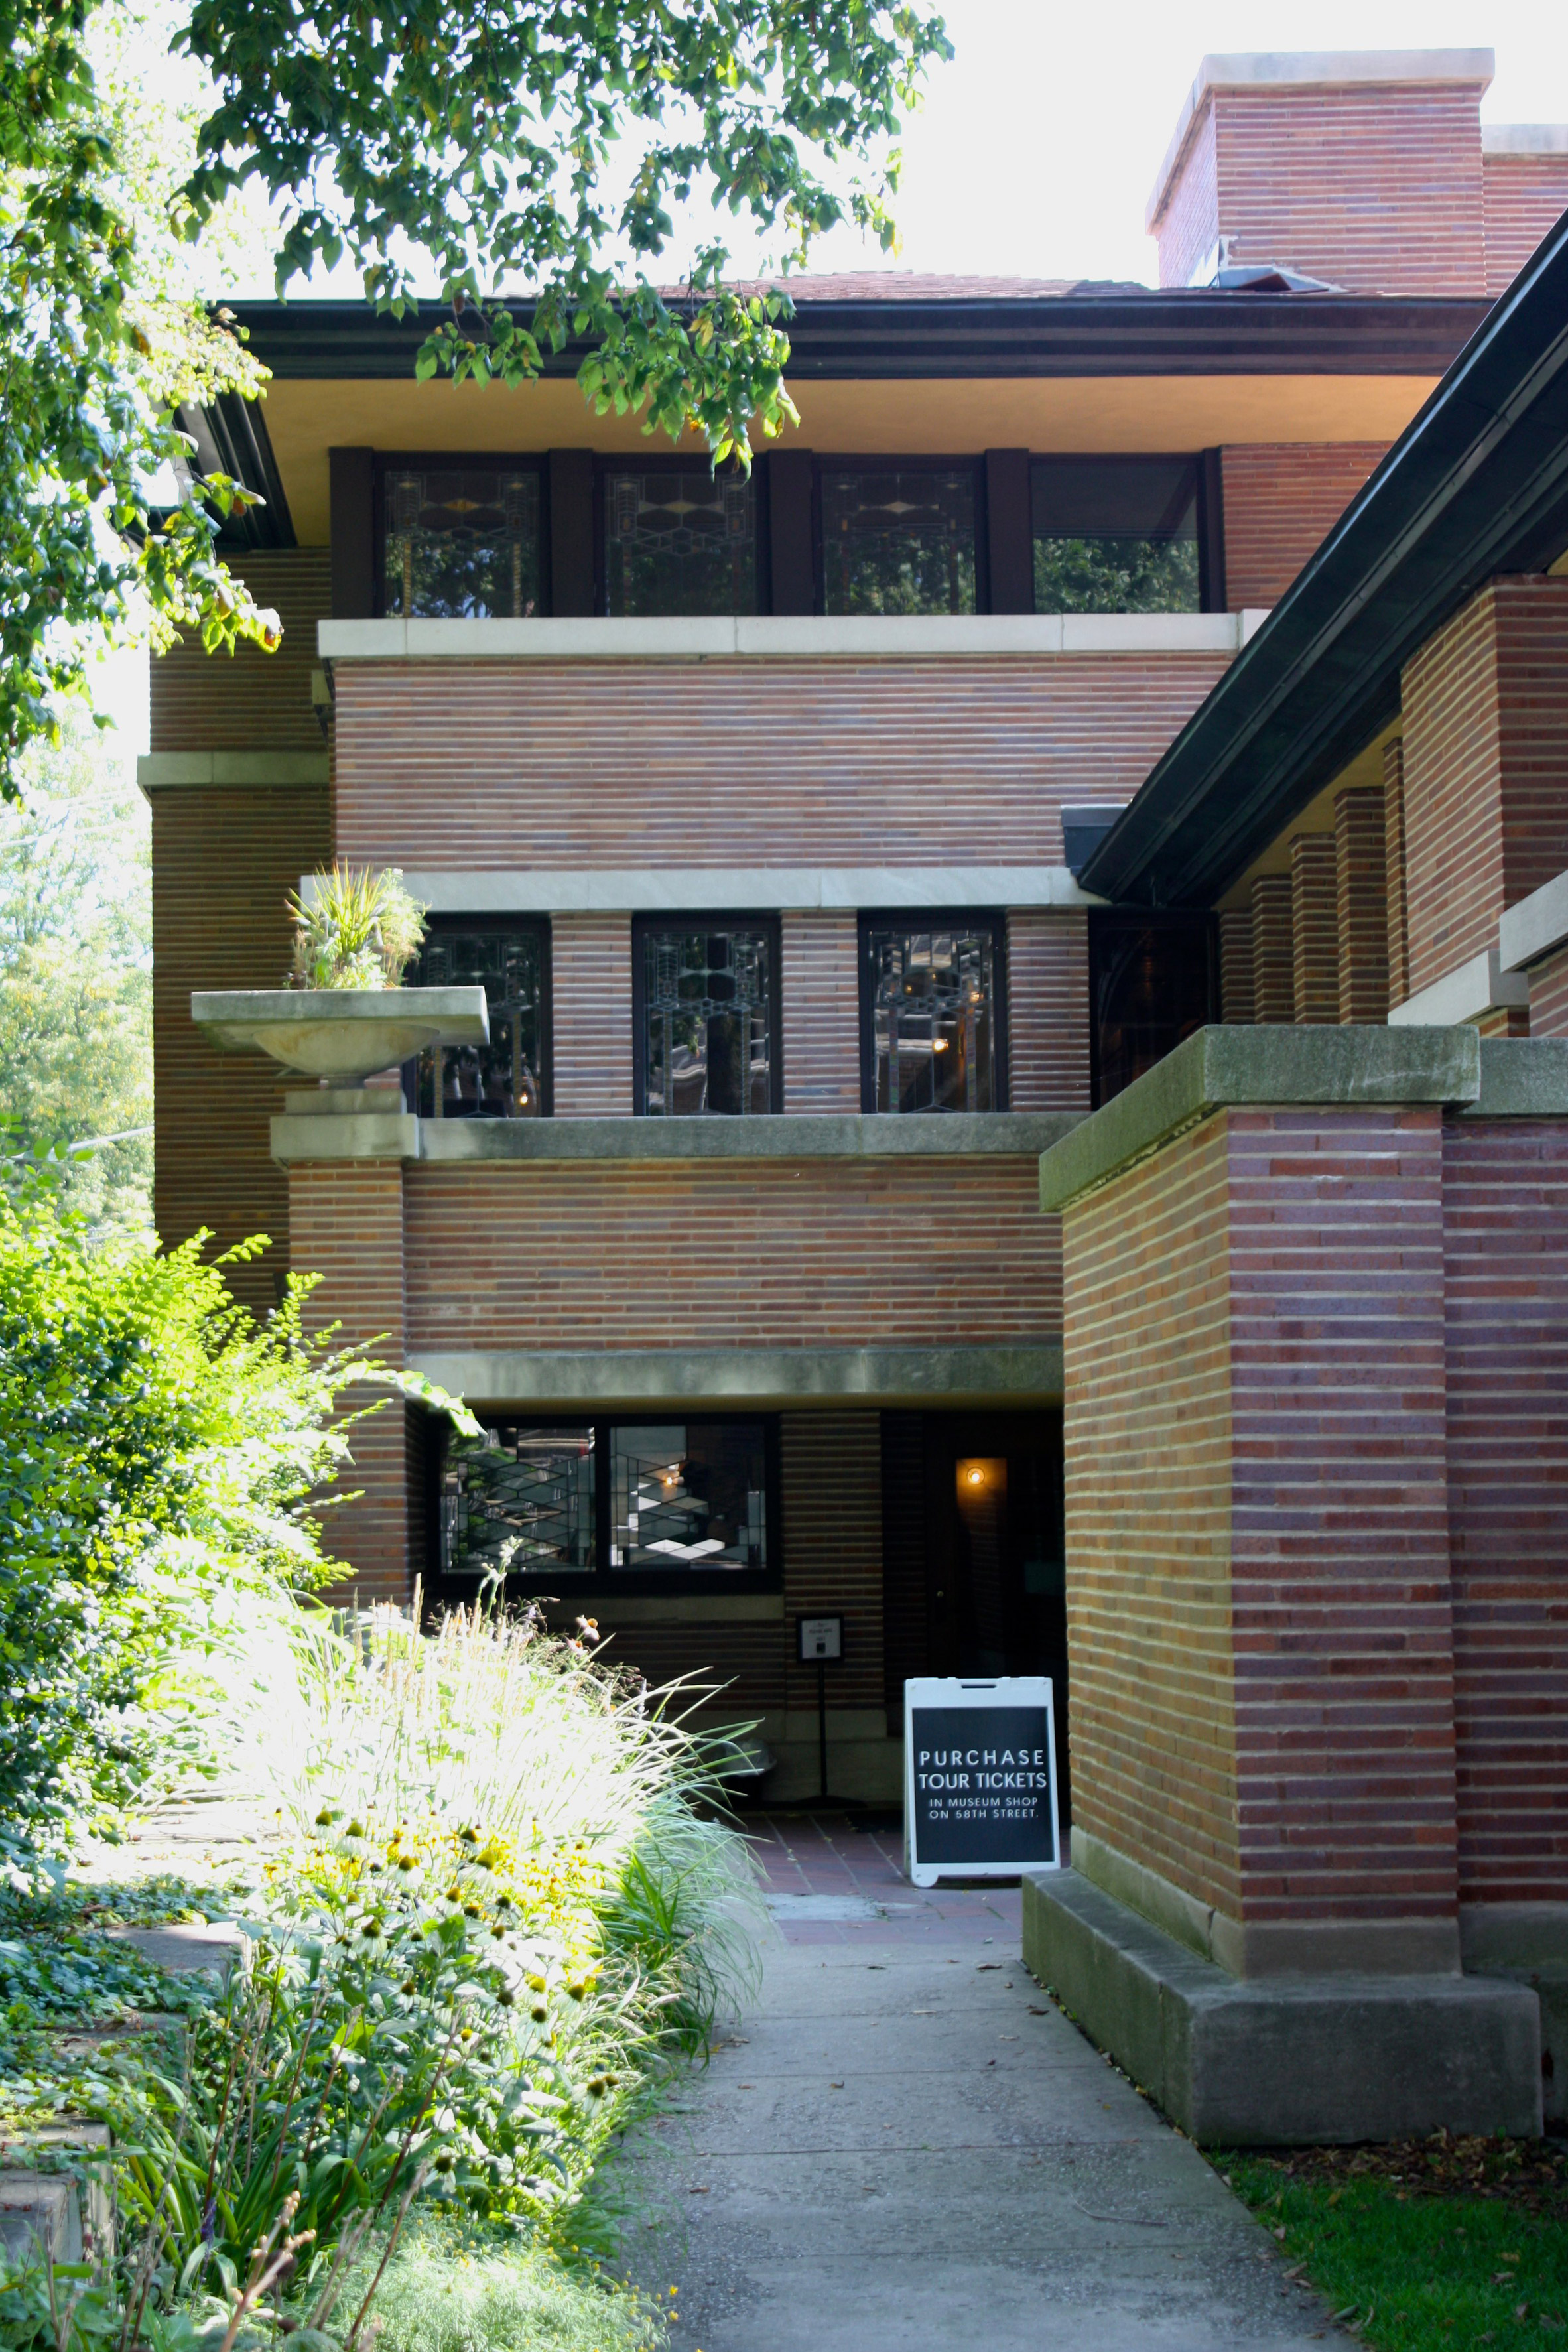 Robie House by Frank Lloyd Wright